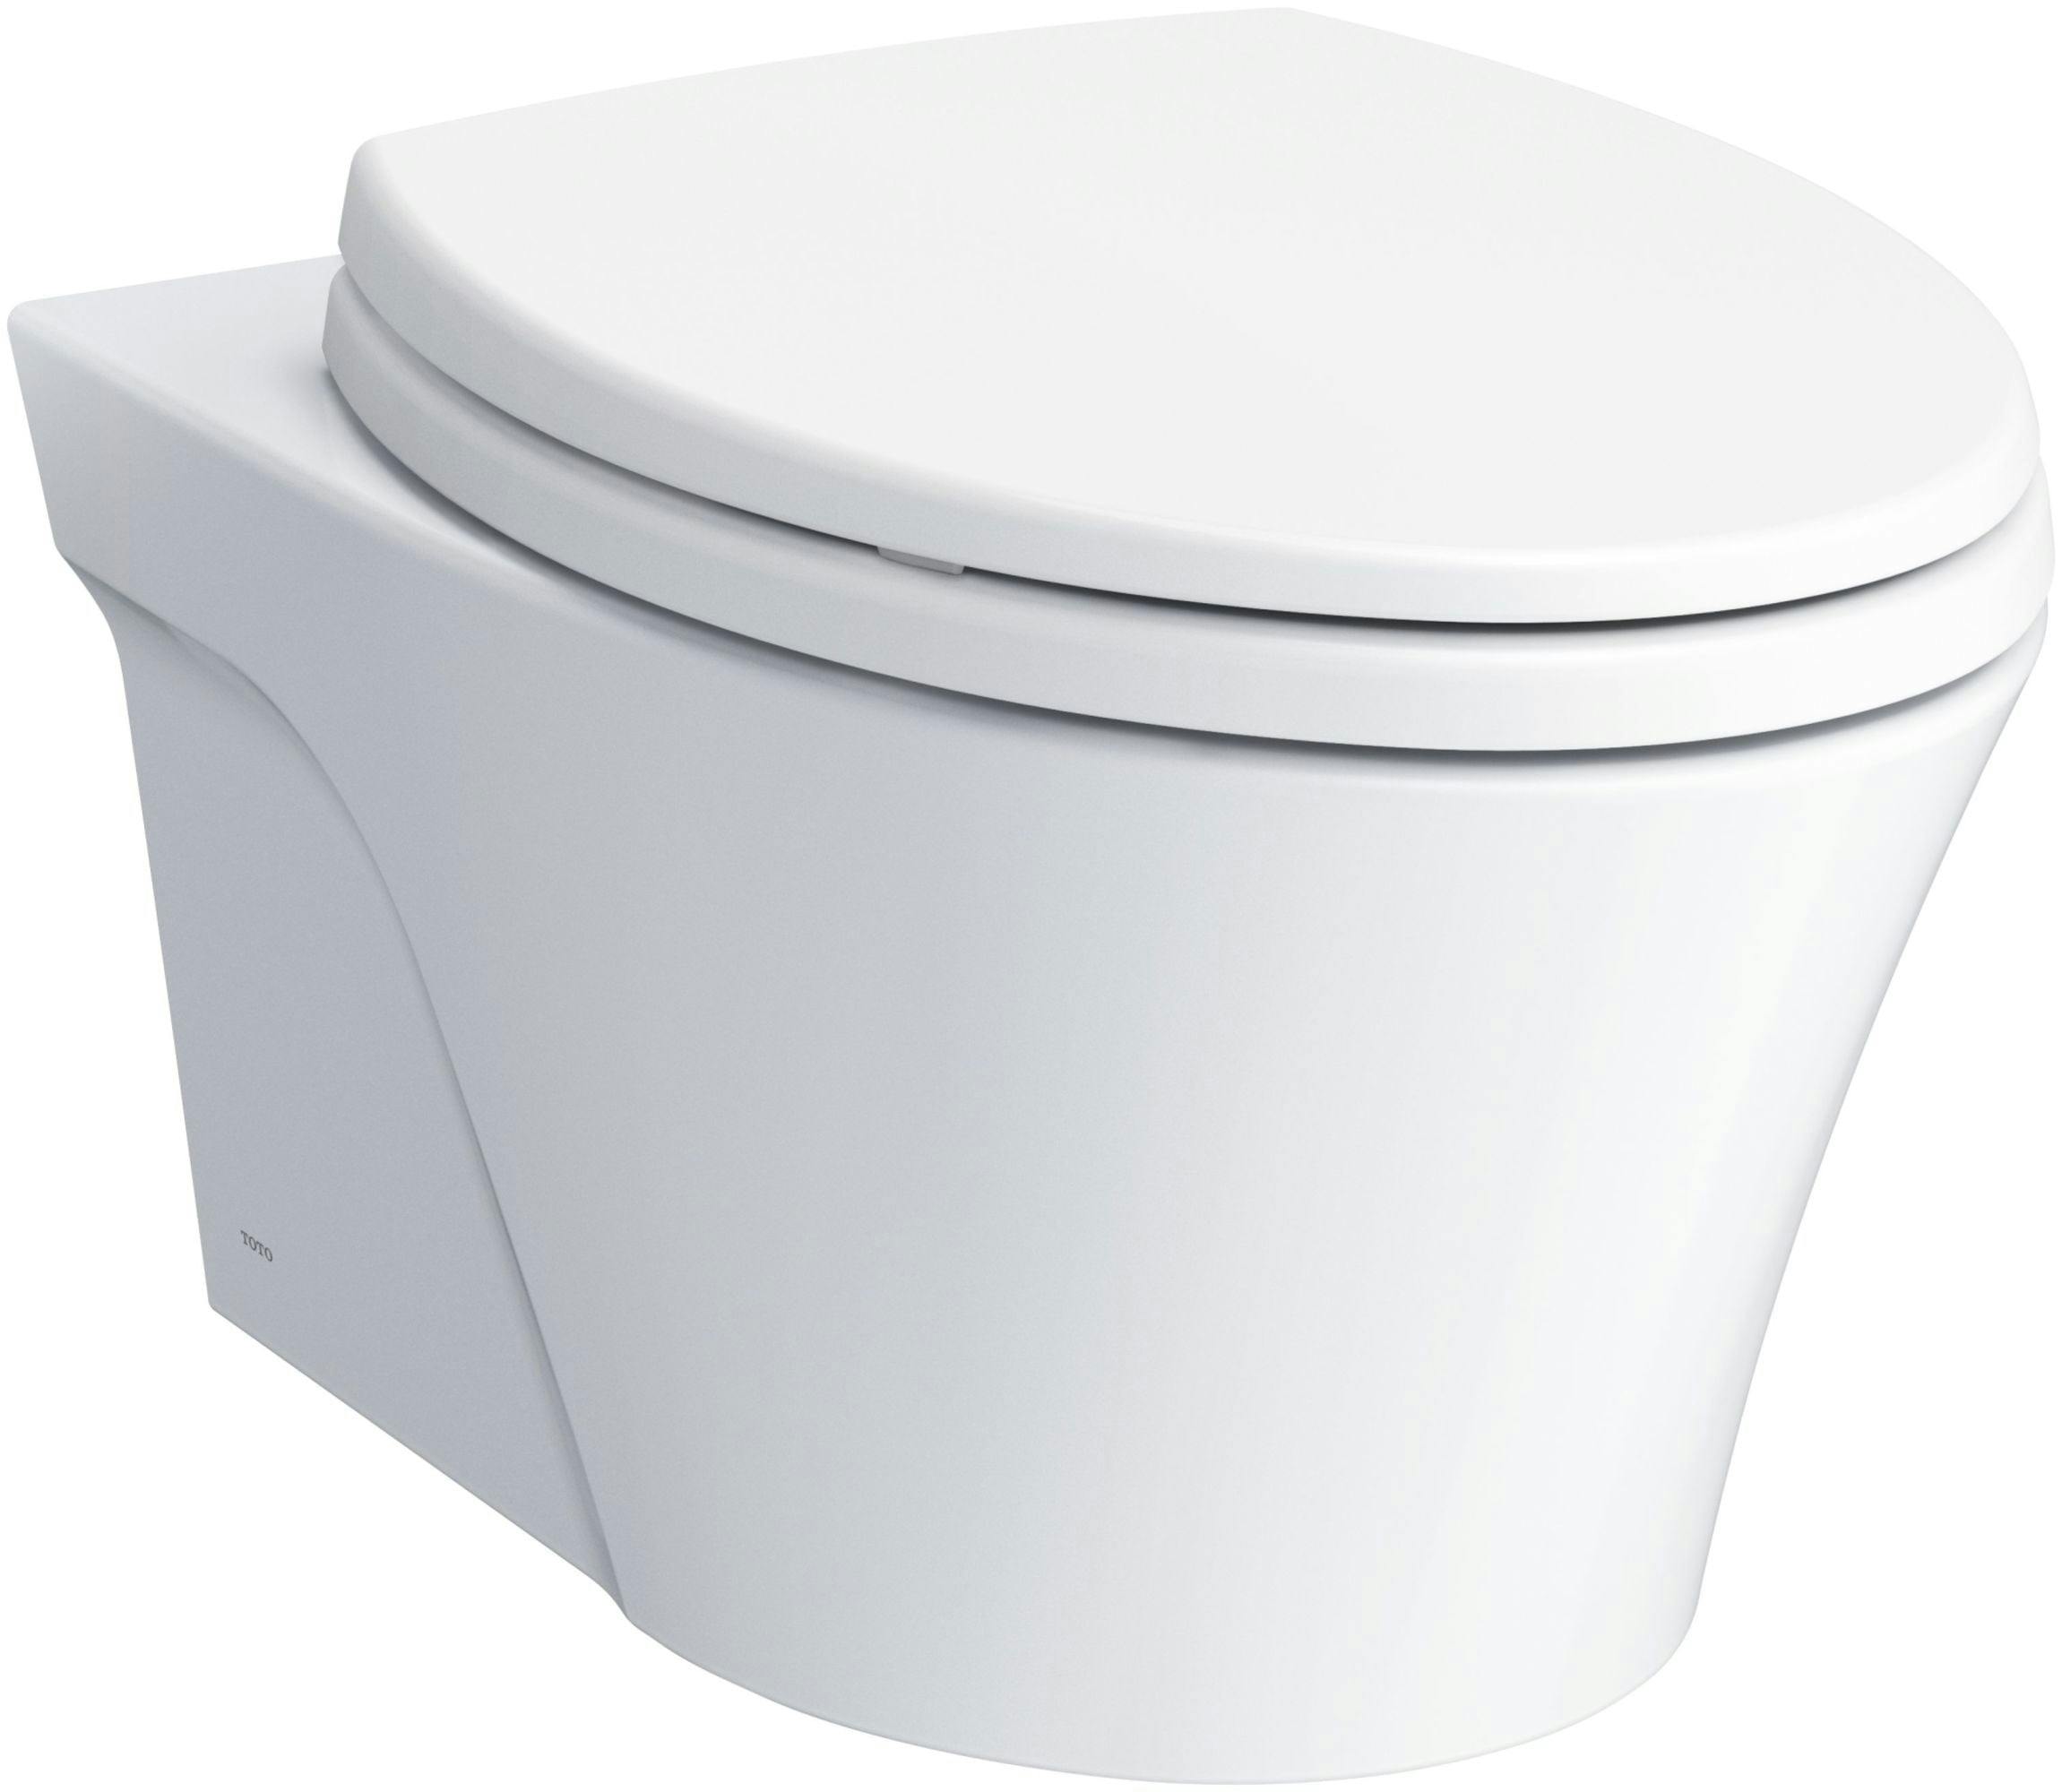 Sleek Modern White Wall-Hung Elongated Toilet Bowl with Skirted Design